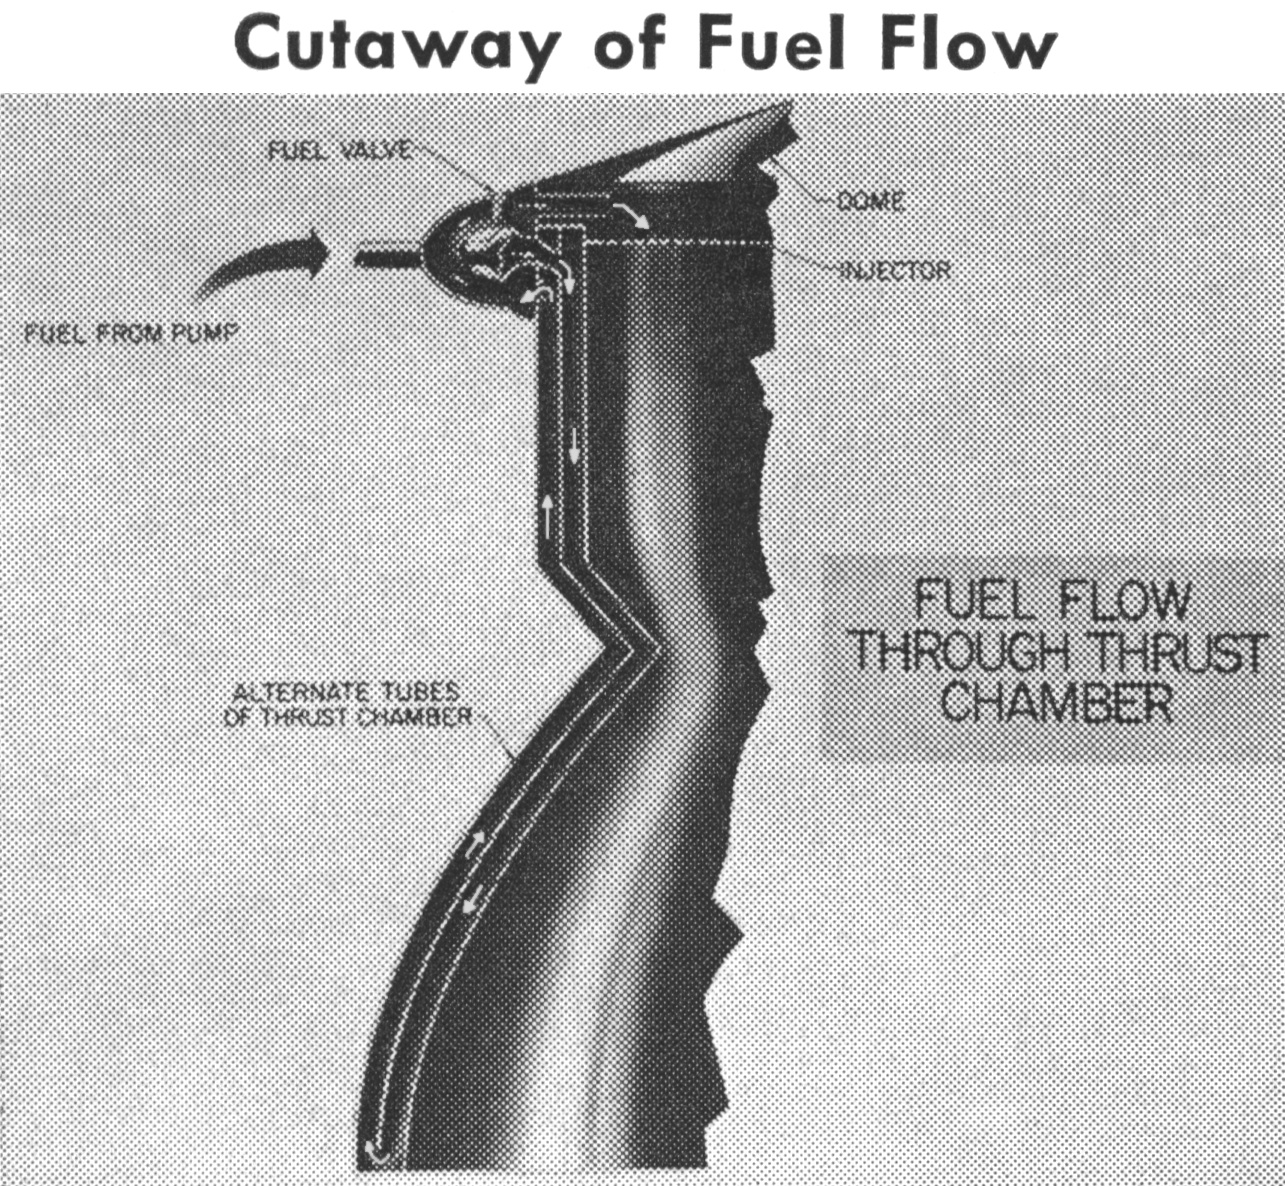 cut-away-of-fuel-flow.jpg